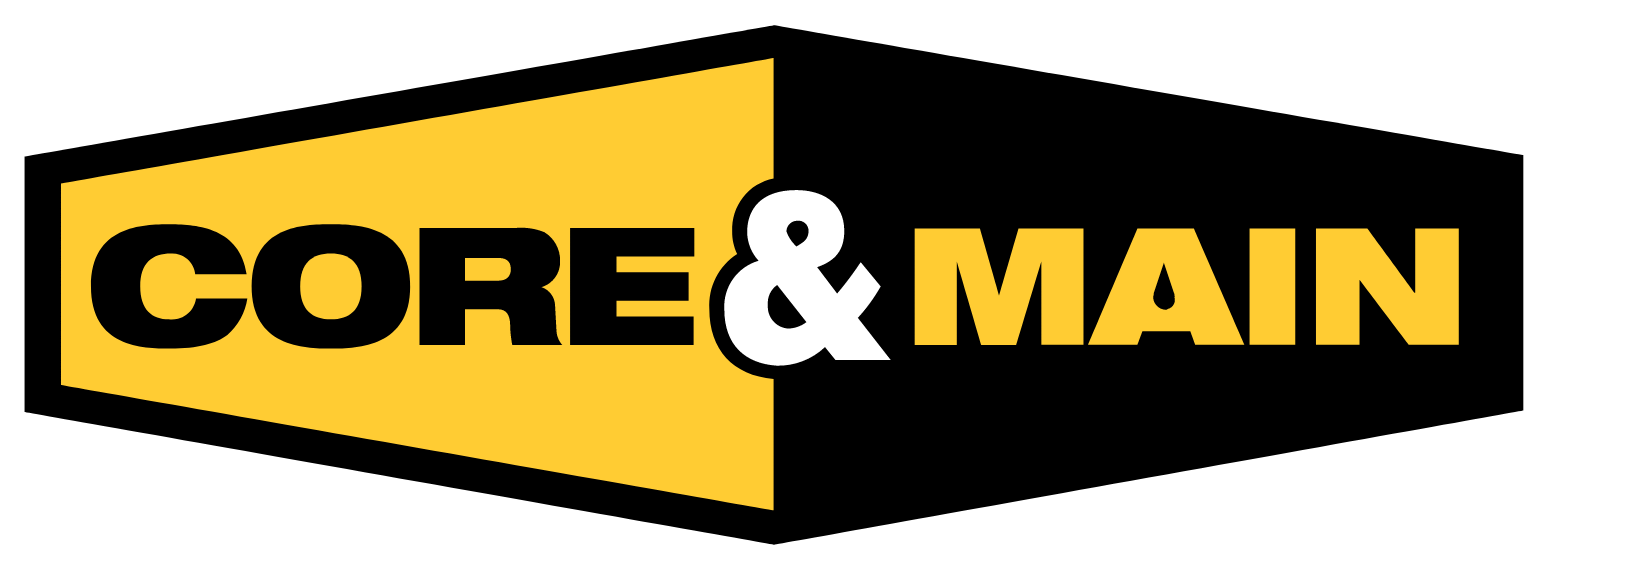 Core & Main logo large (transparent PNG)